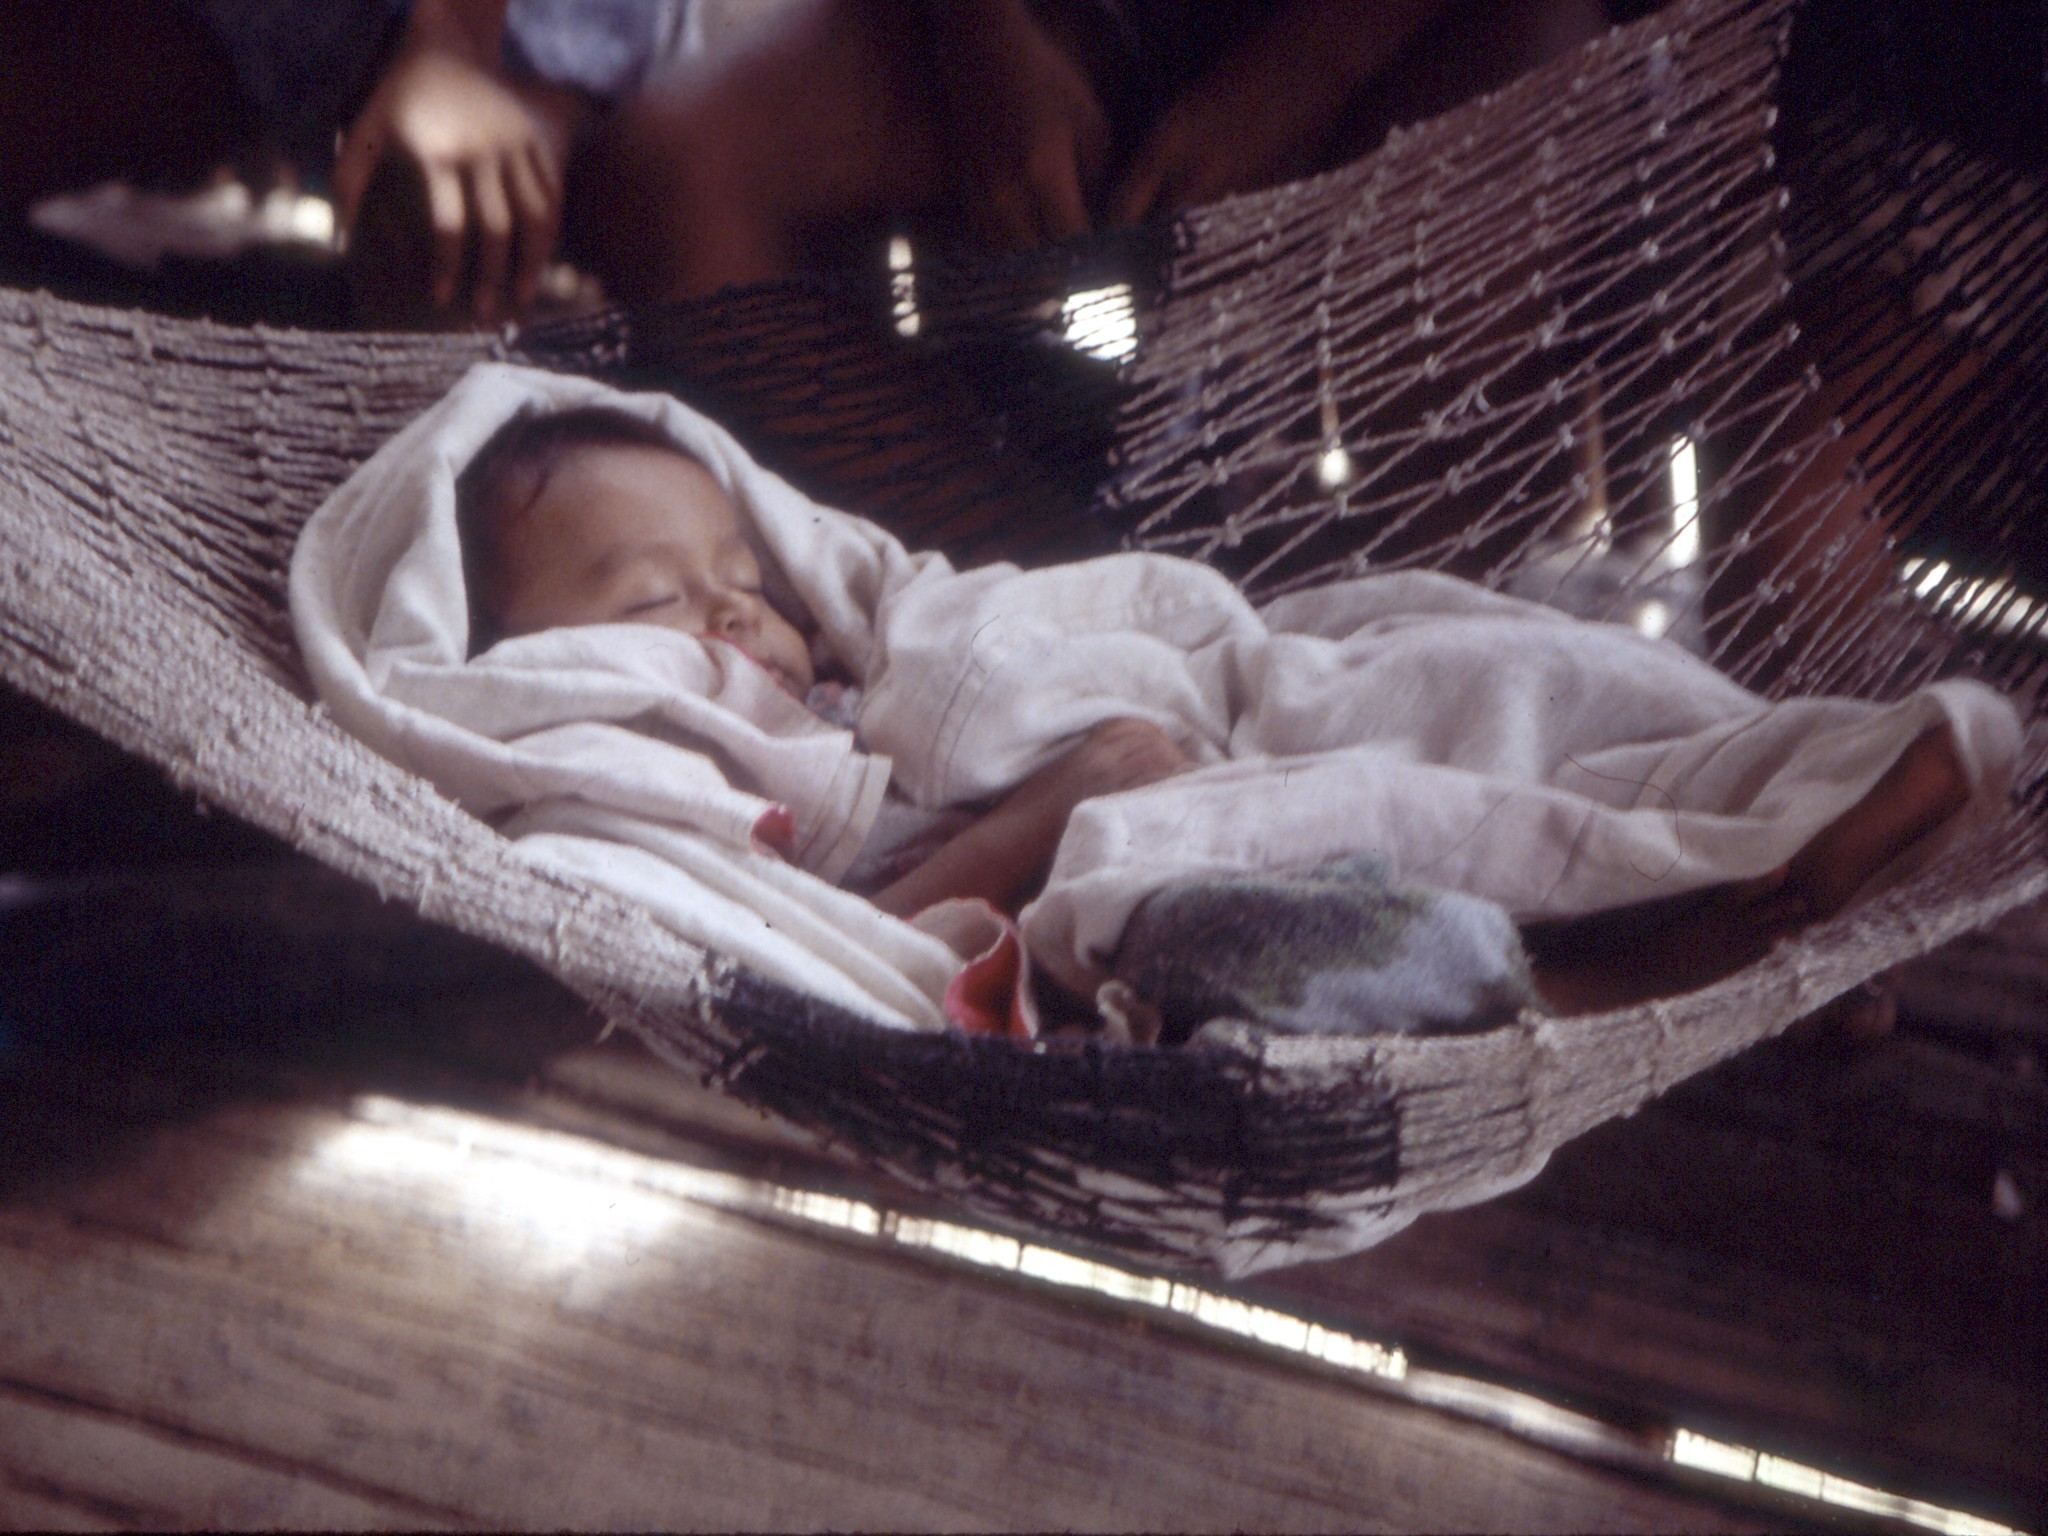 Baby hammock